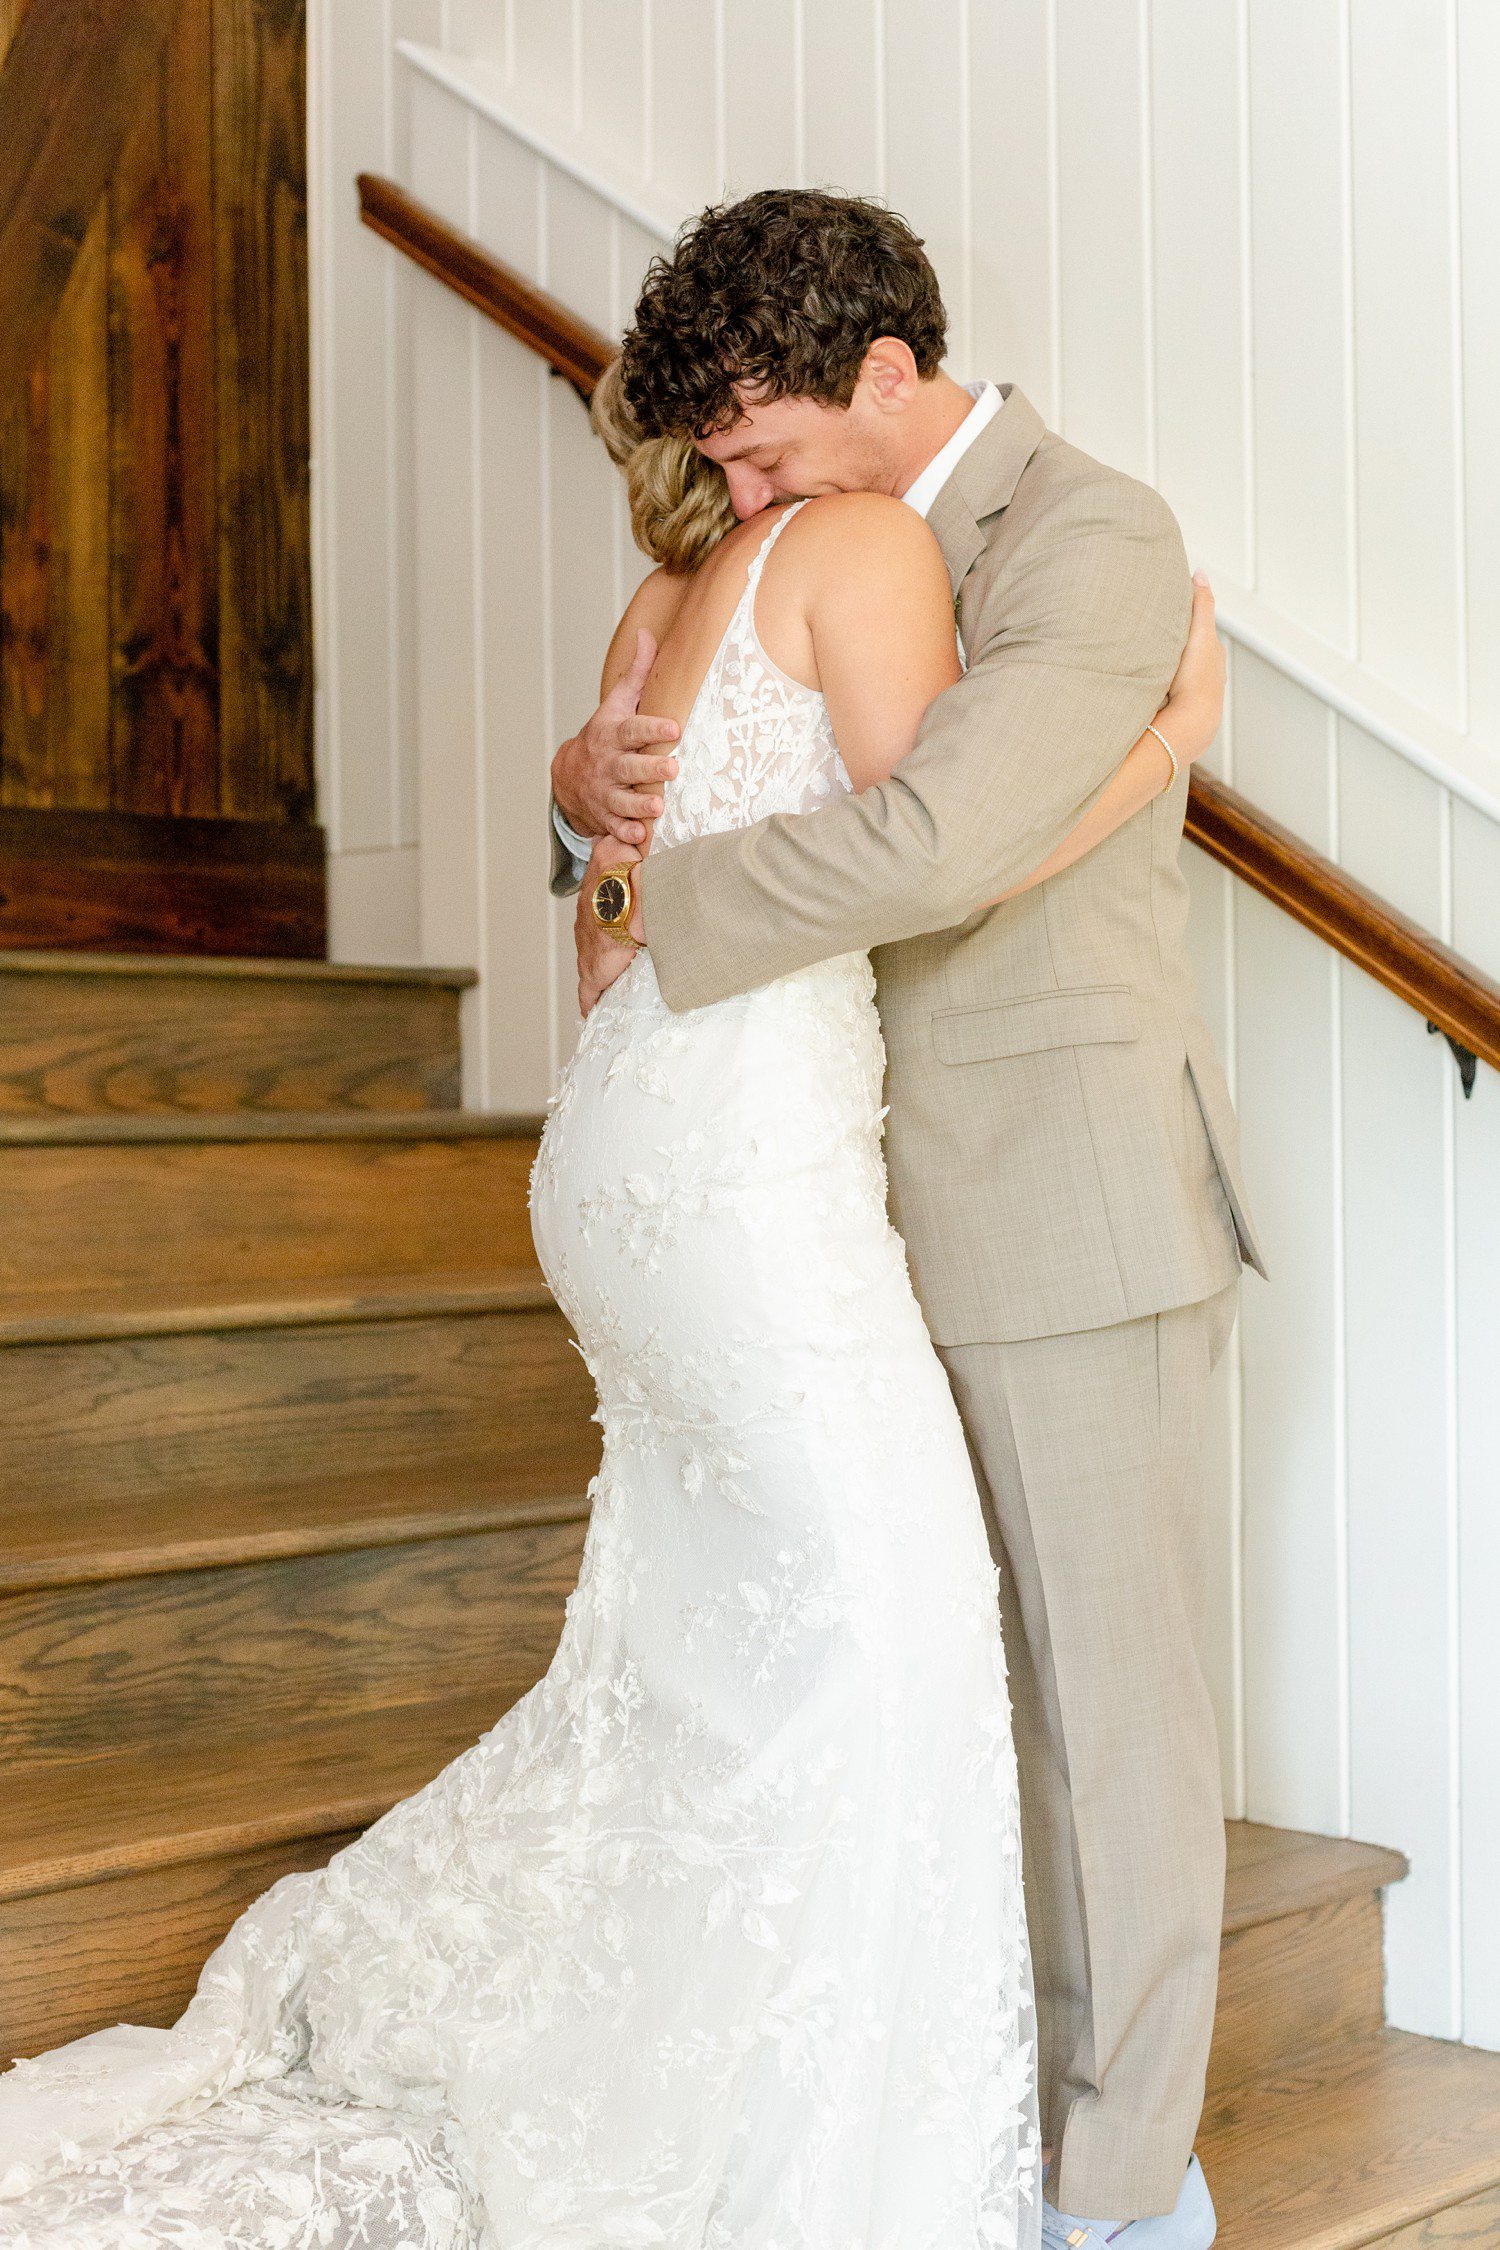 Bride and groom hugging after first look at Sendera Springs.